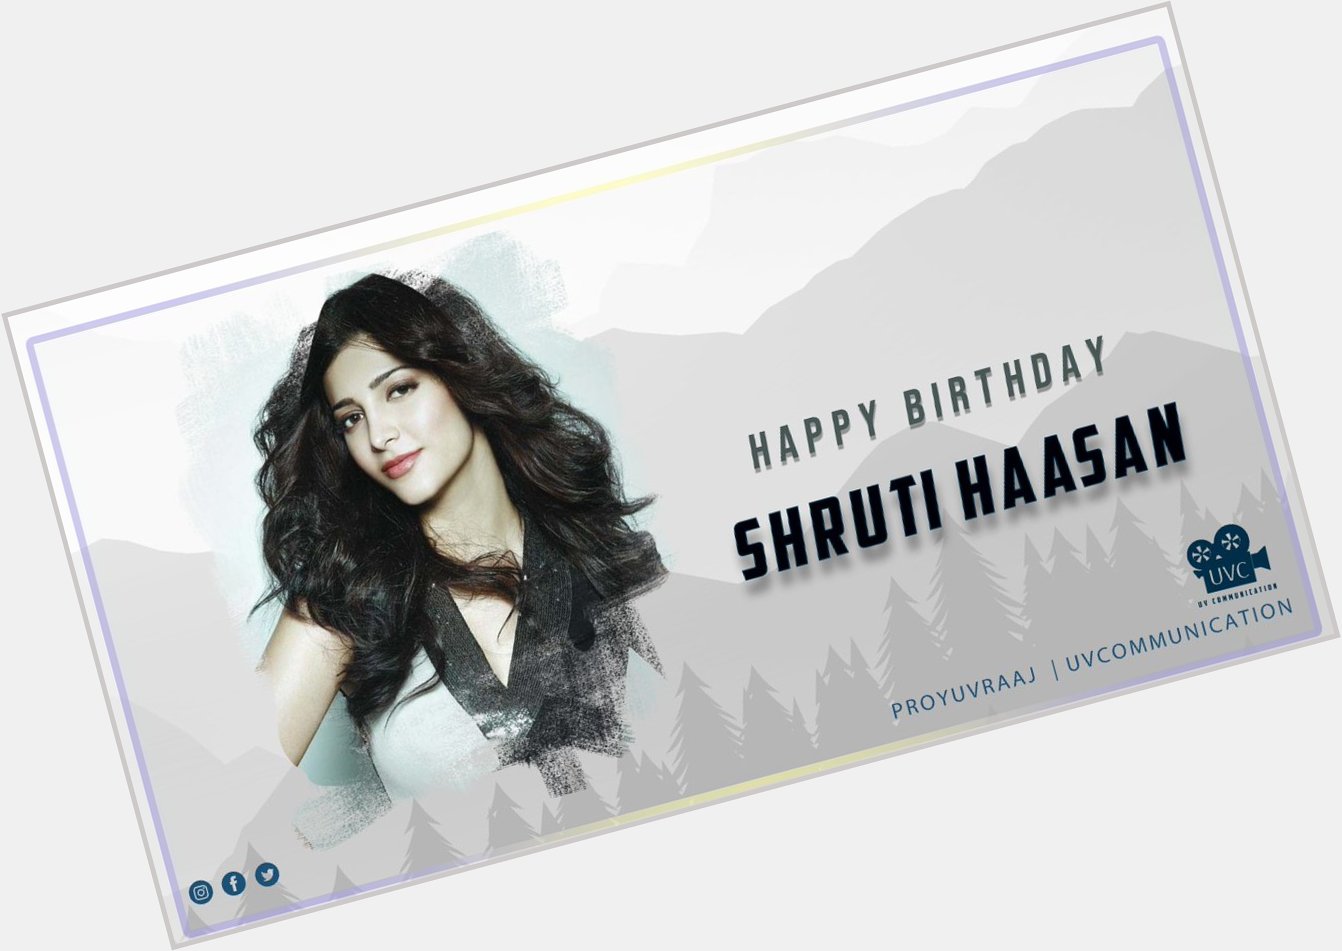 Wishing Actress *Shruti Haasan*  a very Happy Birthday ! 

*HBD Shruti Haasan* 